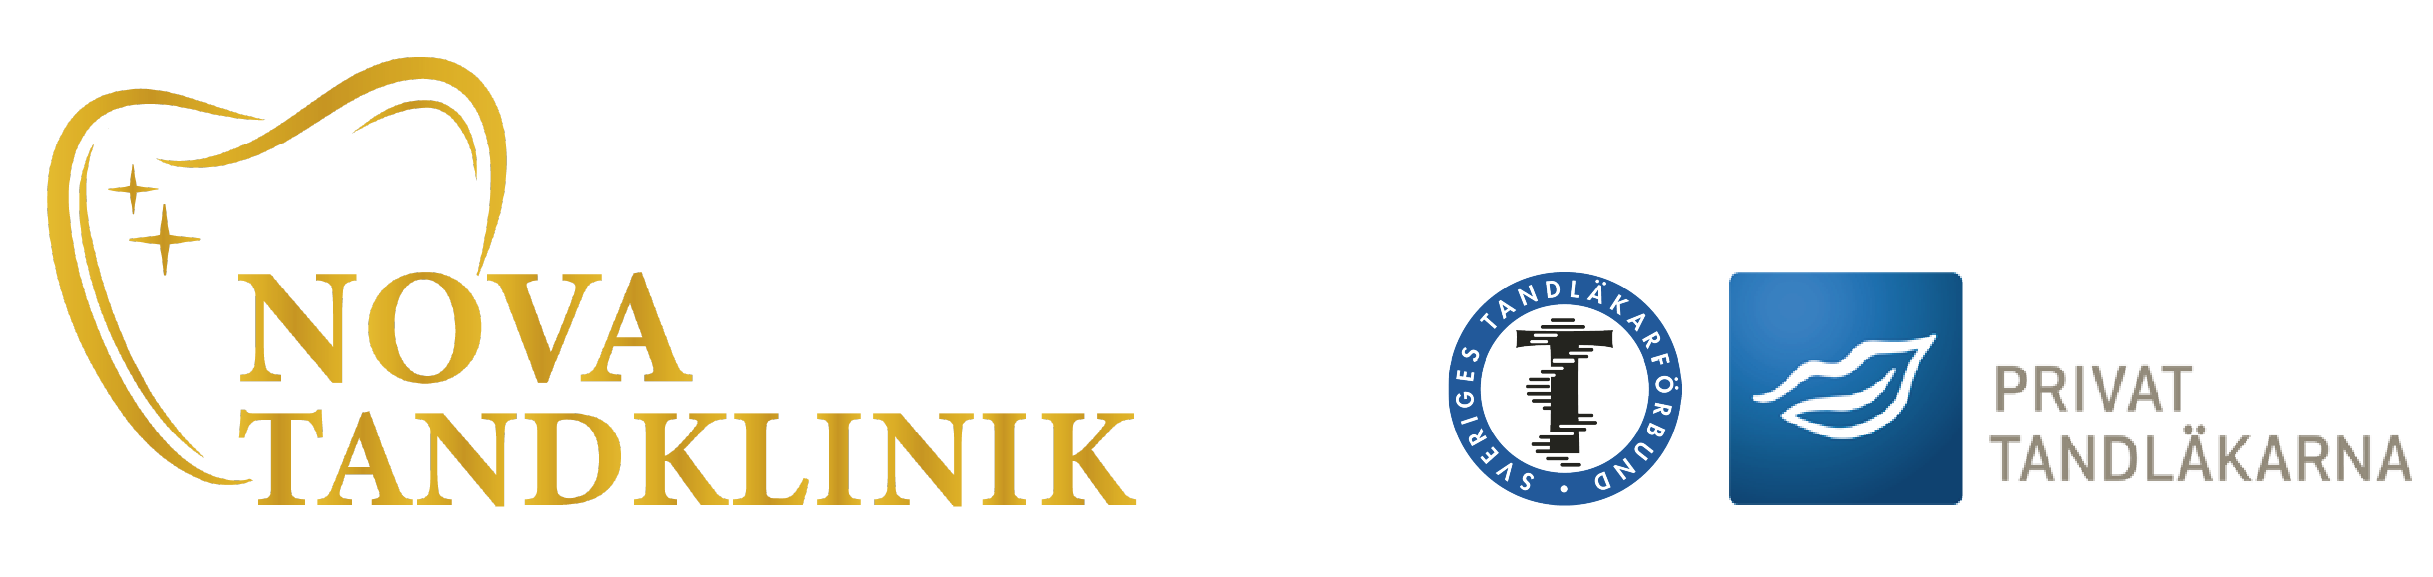 Nova Tandklinik Logotyp